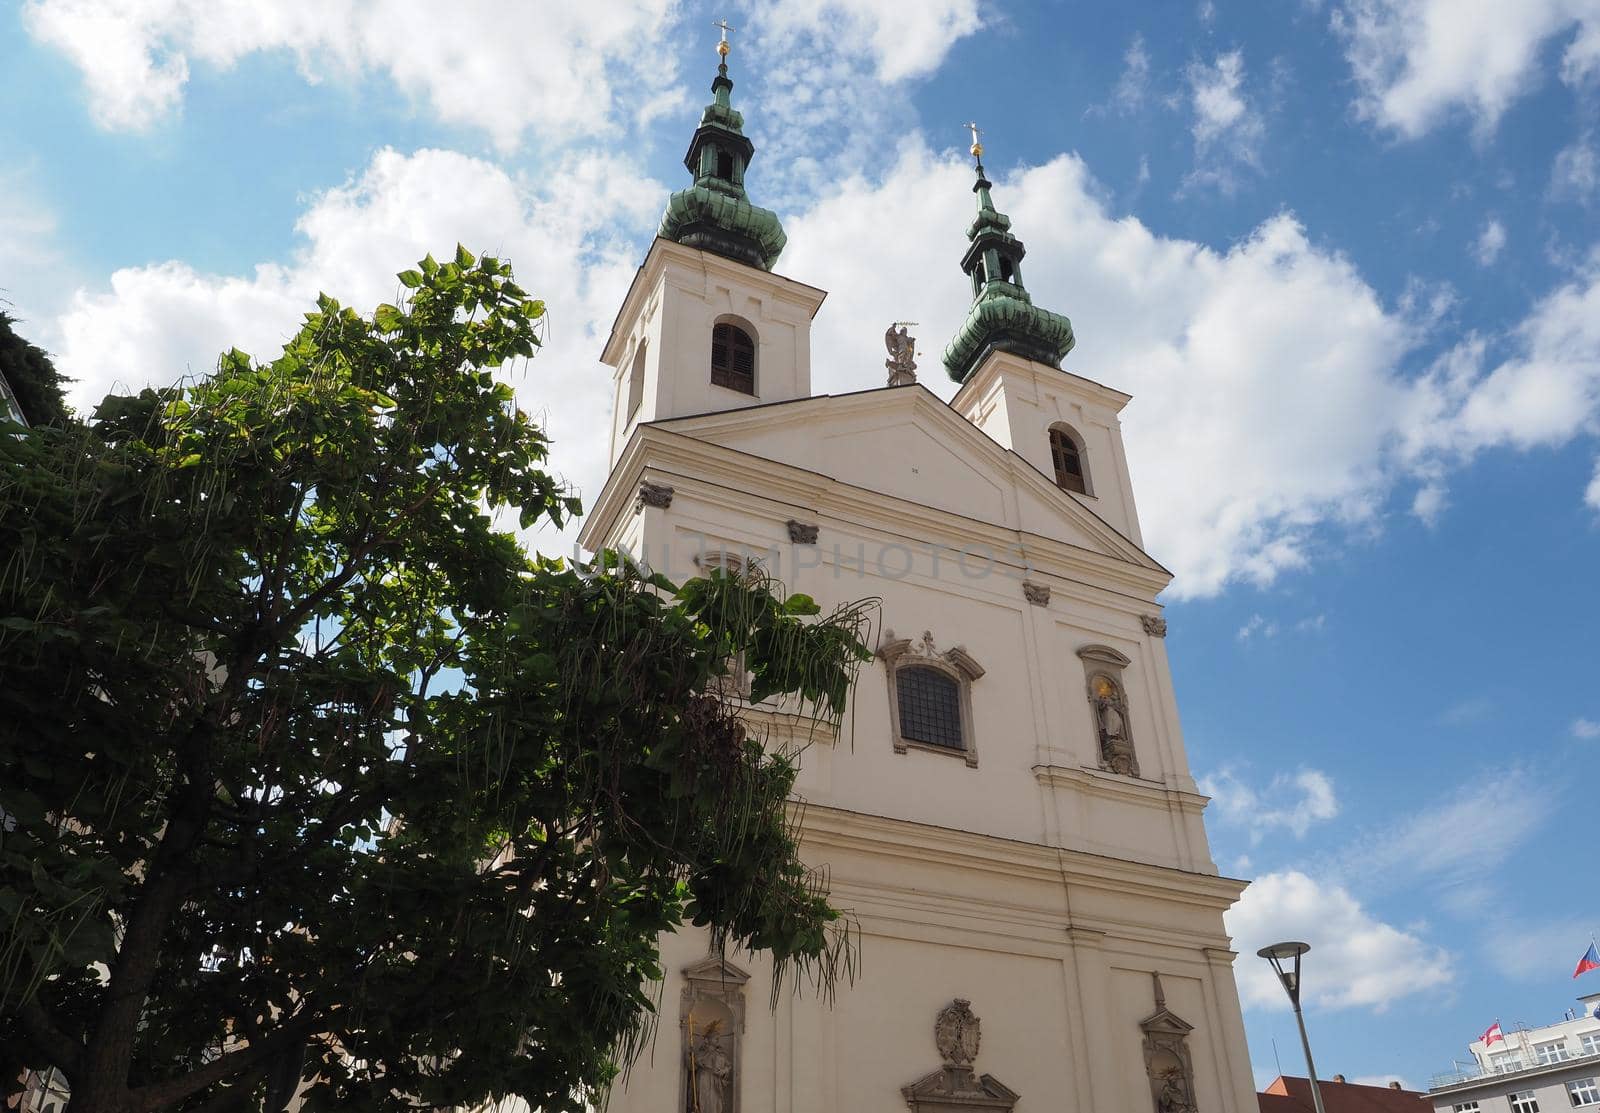 Kostel svateho Michala translation Church of Saint Michael in Brno, Czech Republic